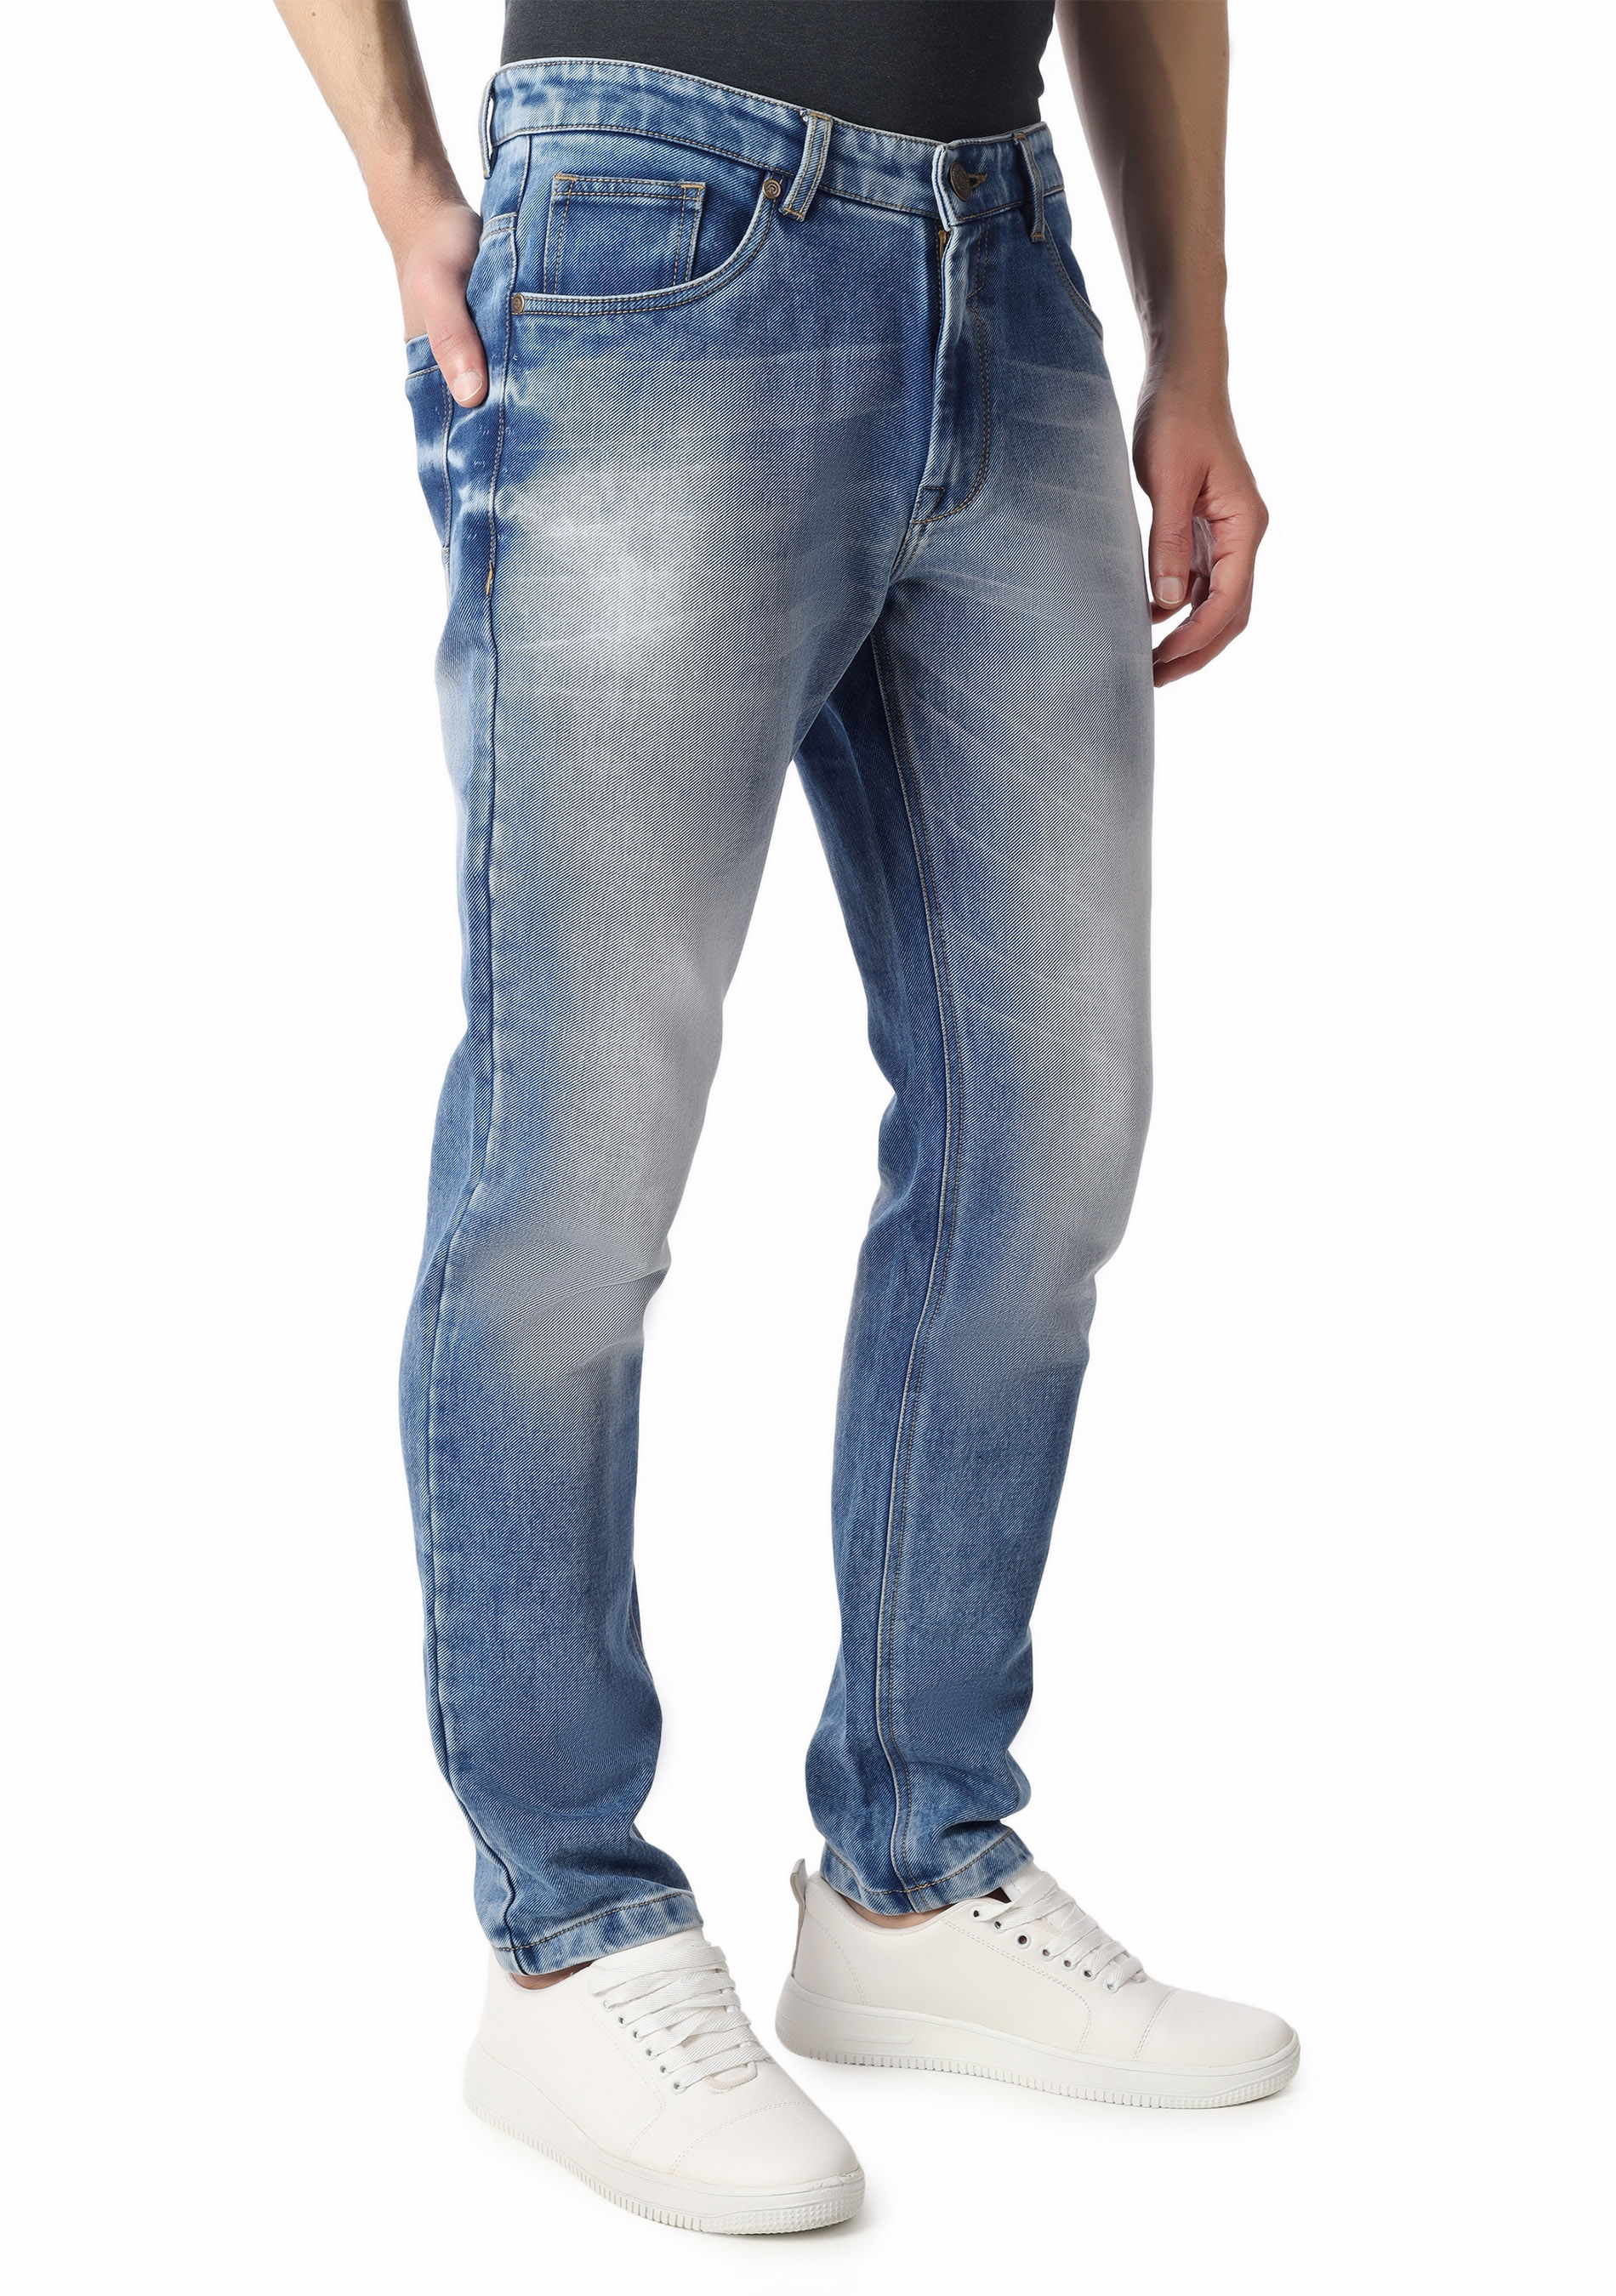 Men's Blue Regular Fit Cotton Jeans - Buy Online in India @ Mehar